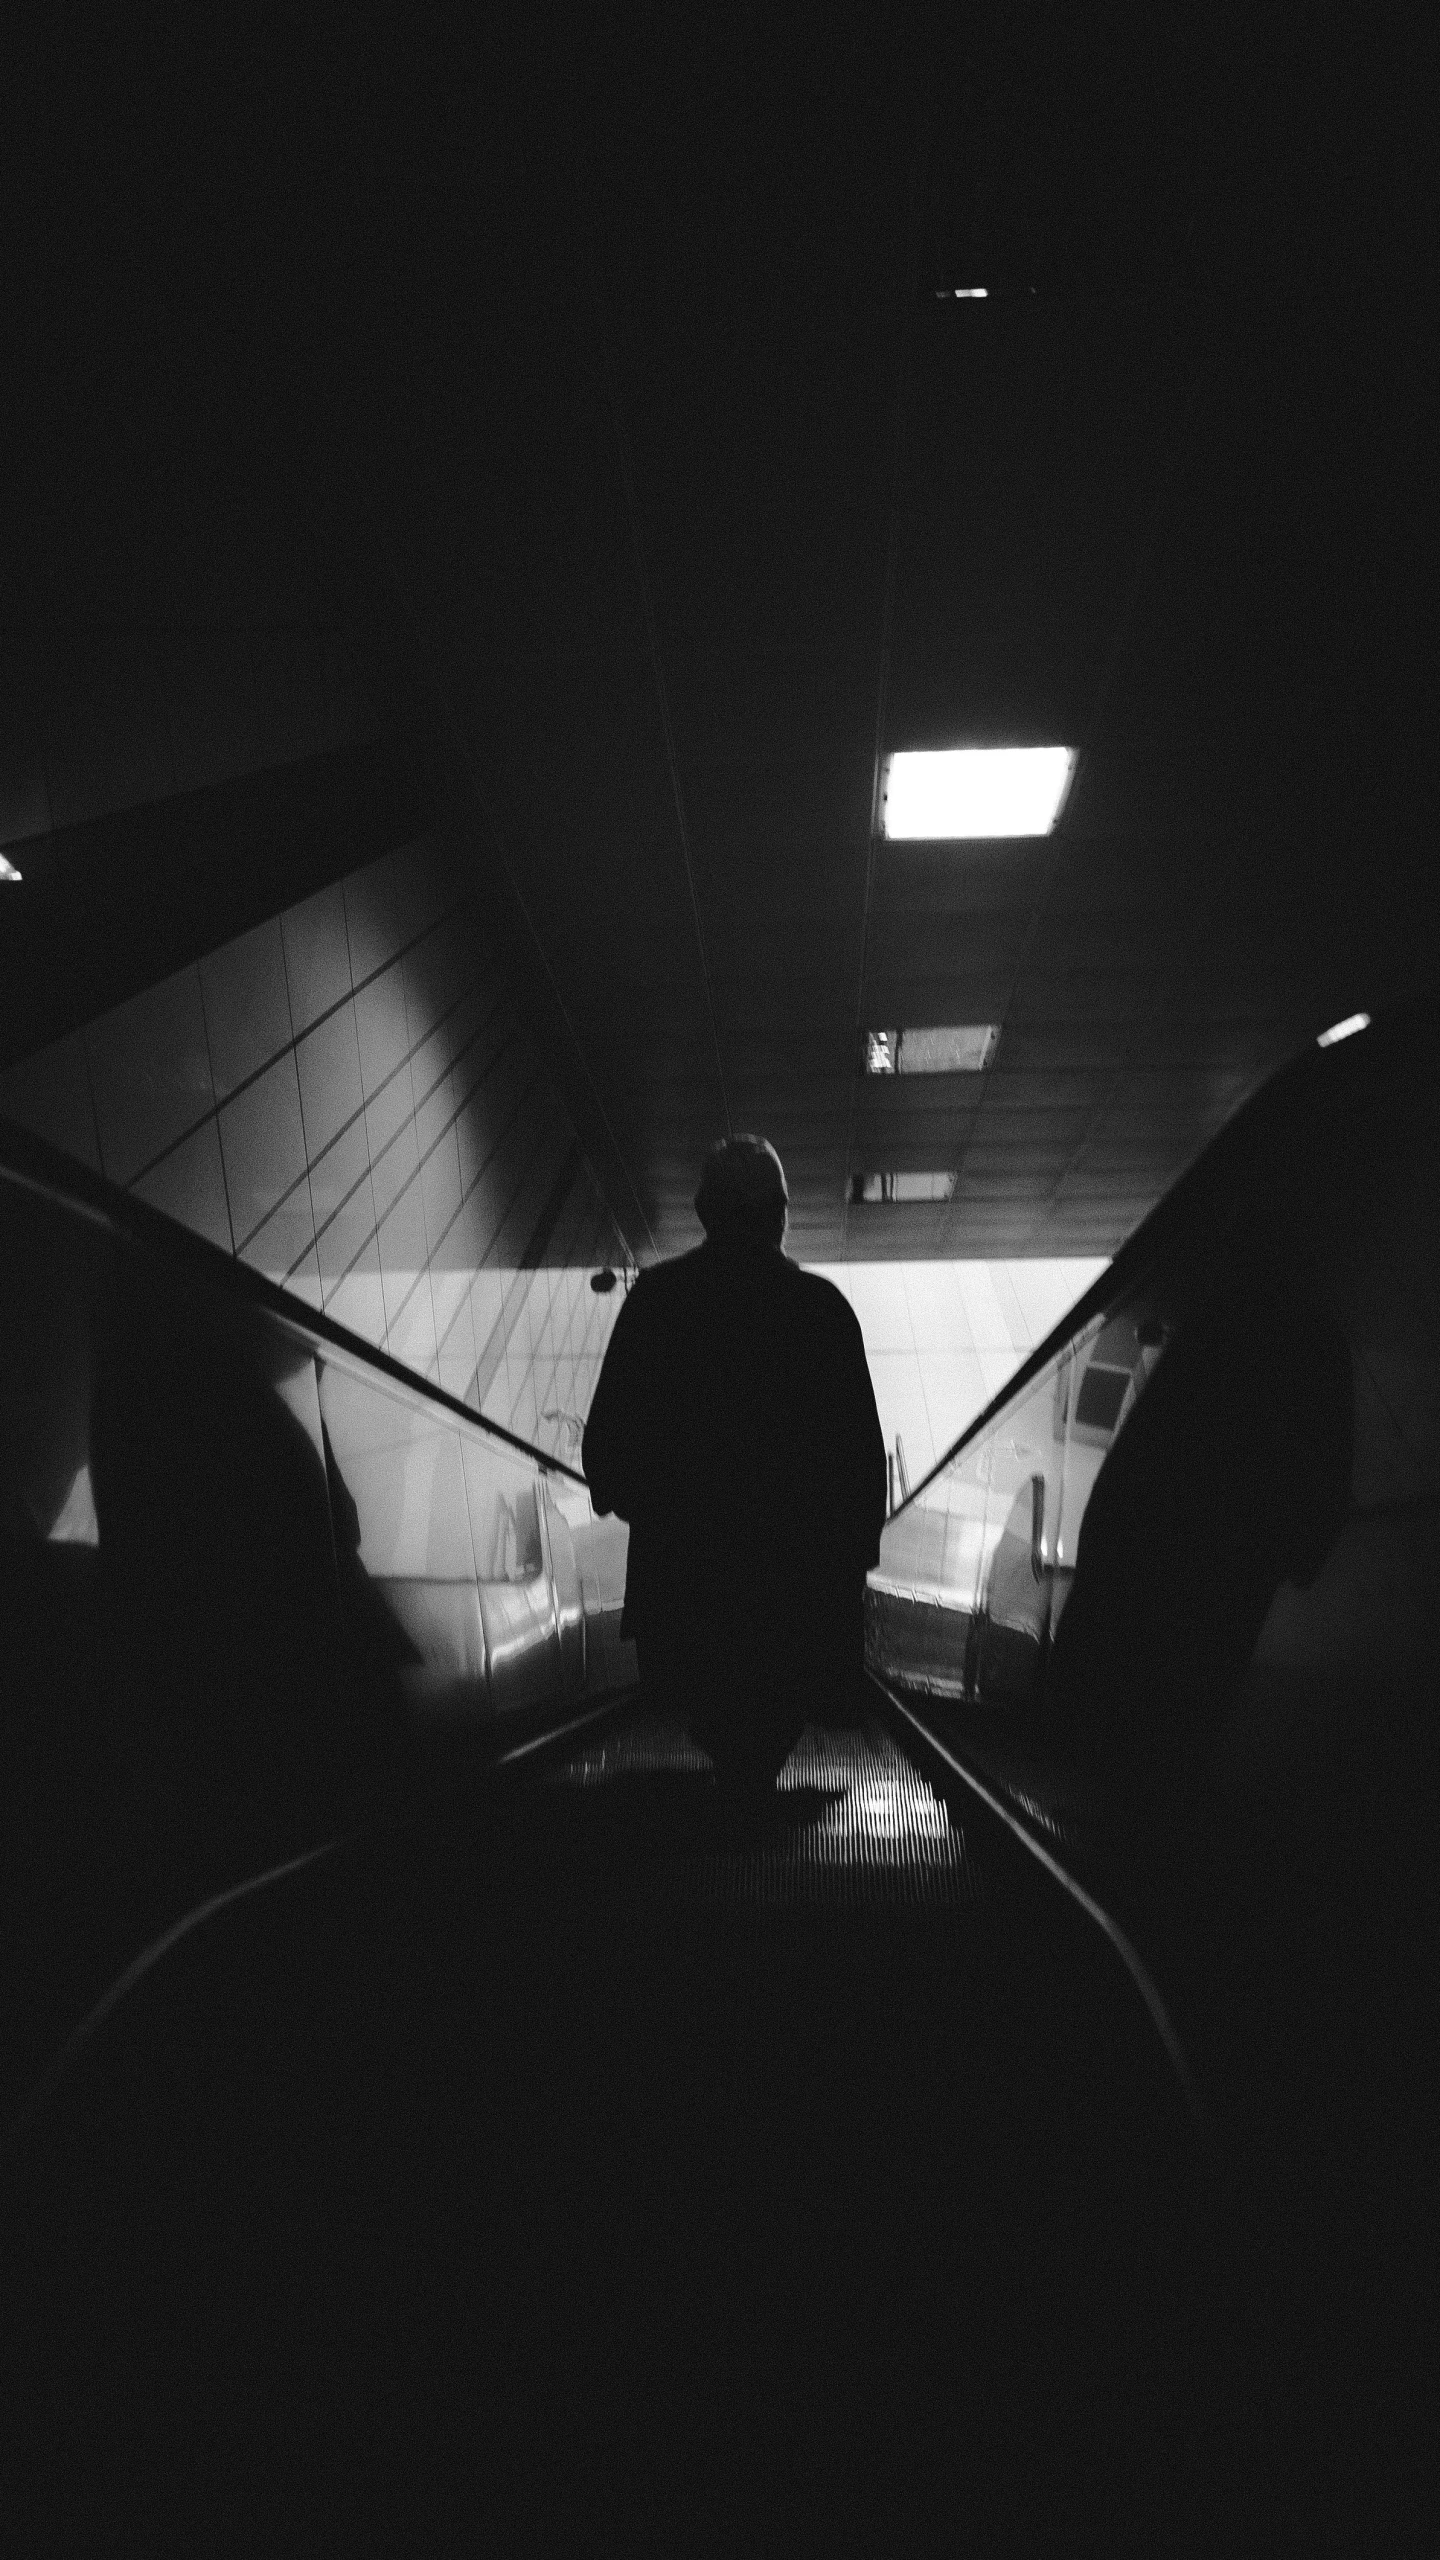 a man walking through a tunnel at night